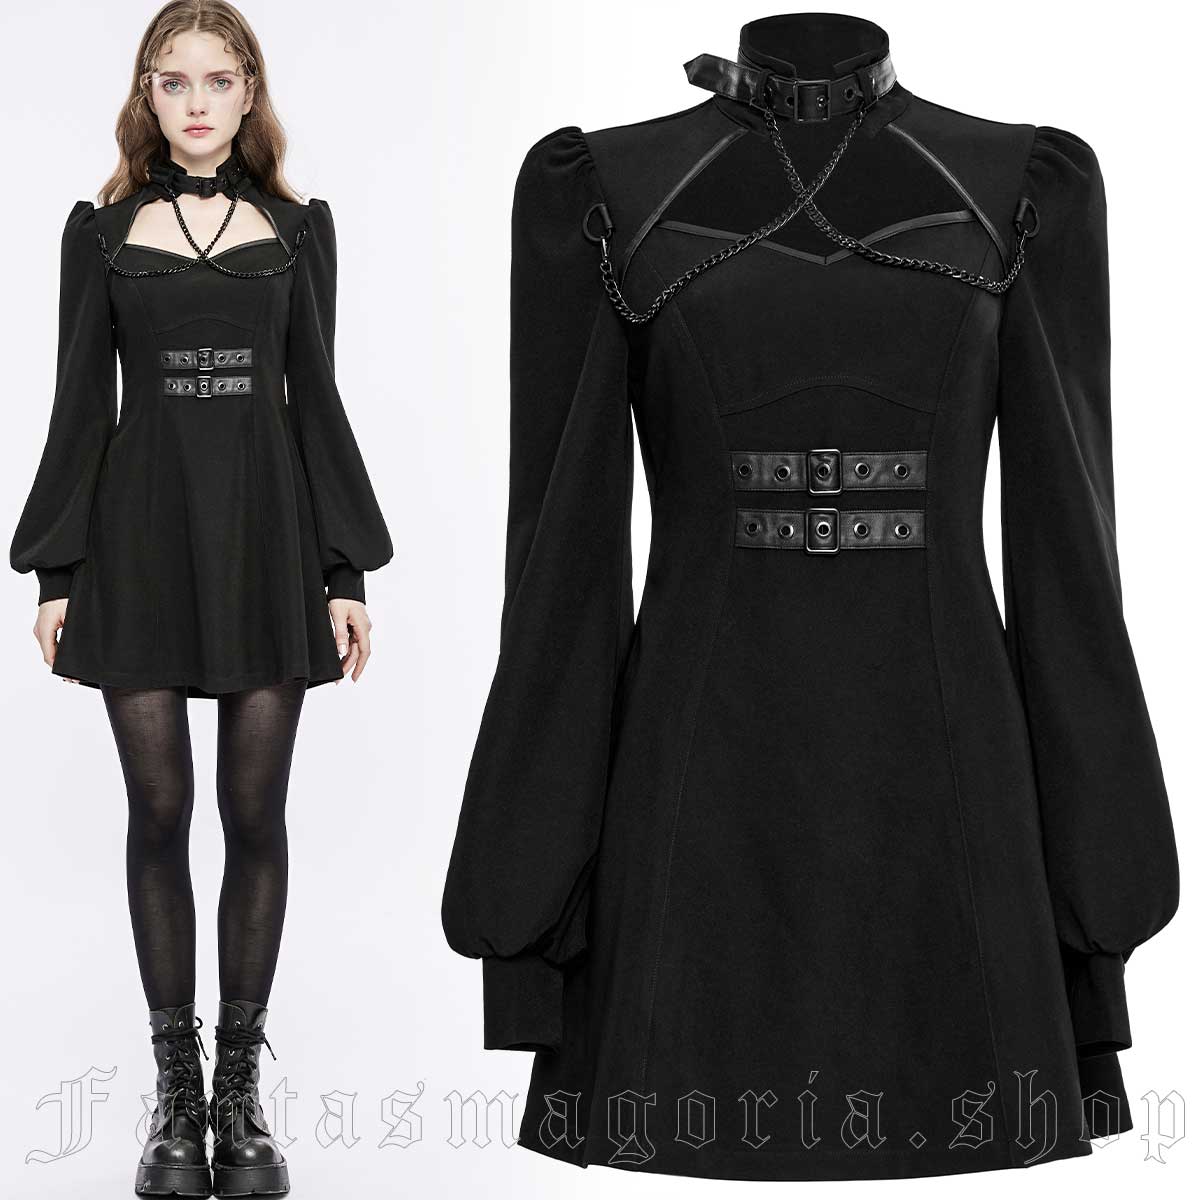 Harley Quinn Gothic Dress by PUNK RAVE brand